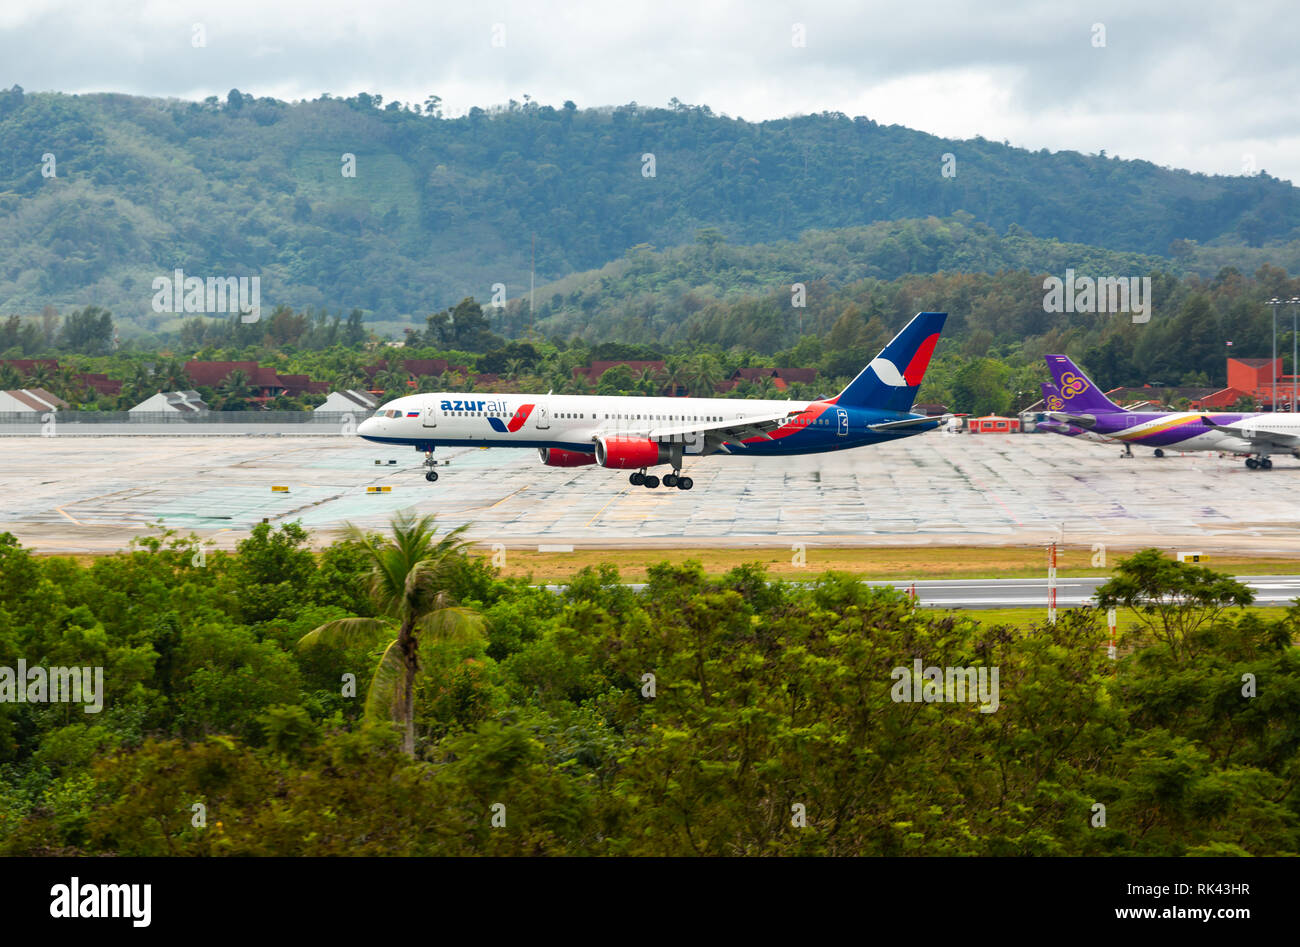 Boeing AzurAir landing approach Stock Photo